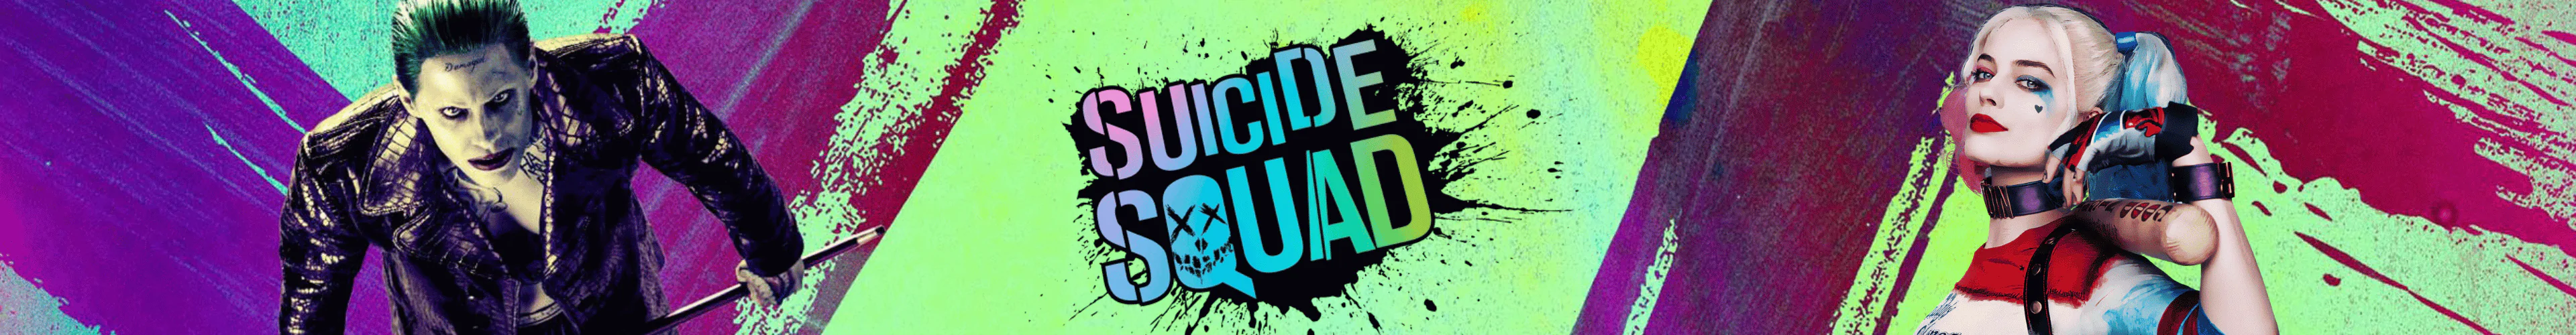 Suicide Squad bags banner